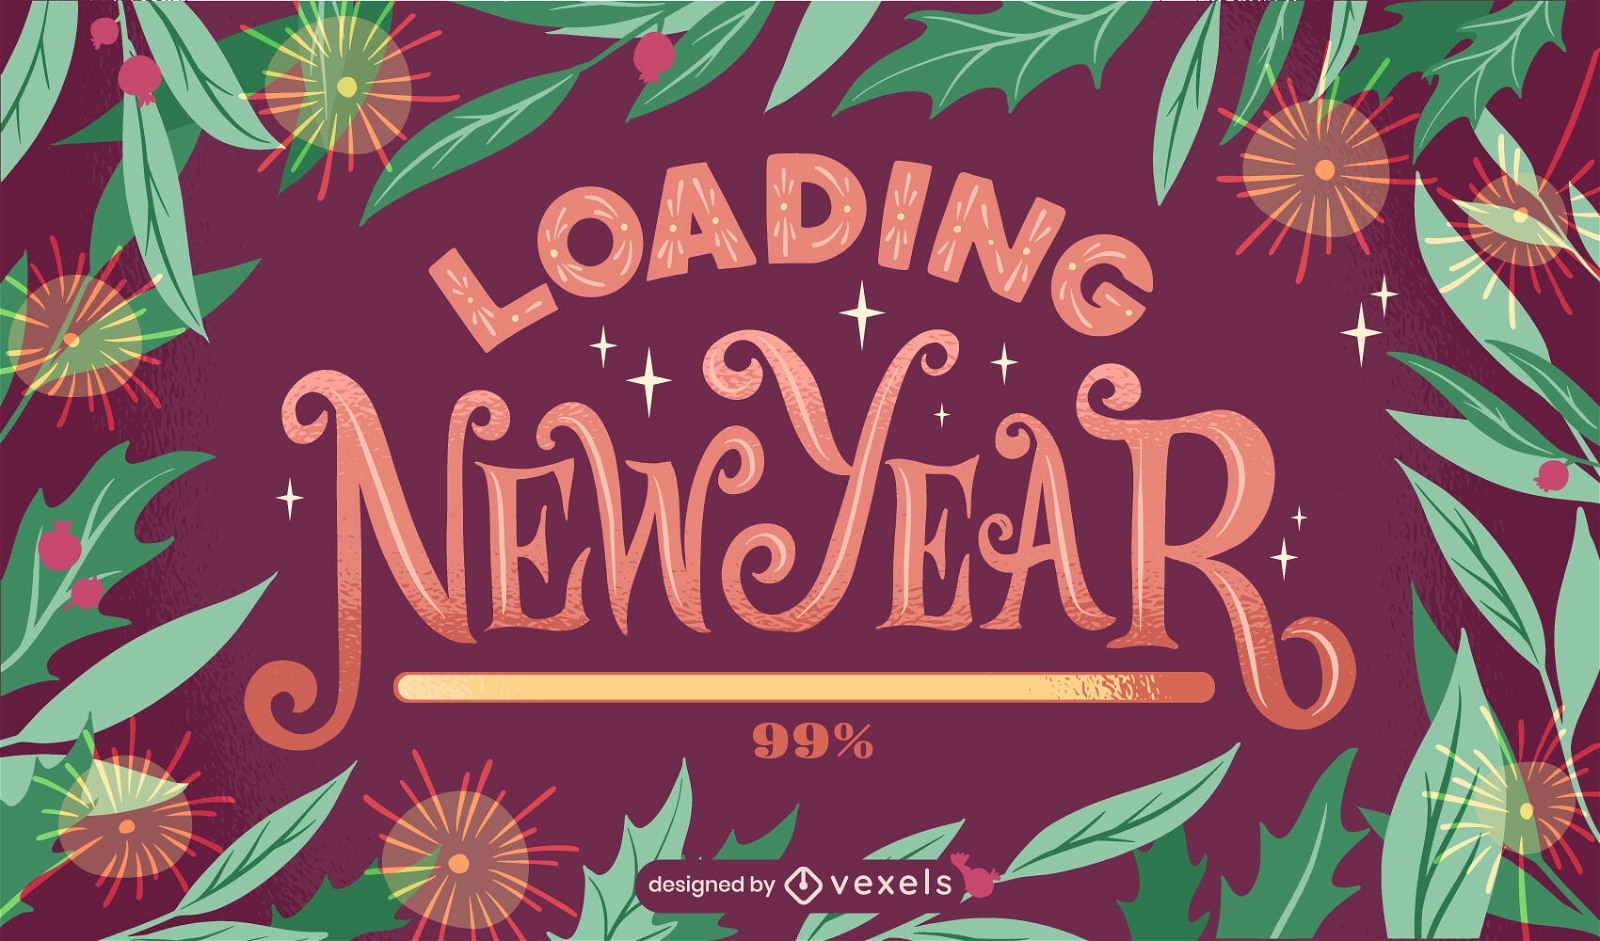 Loading New Year lettering design